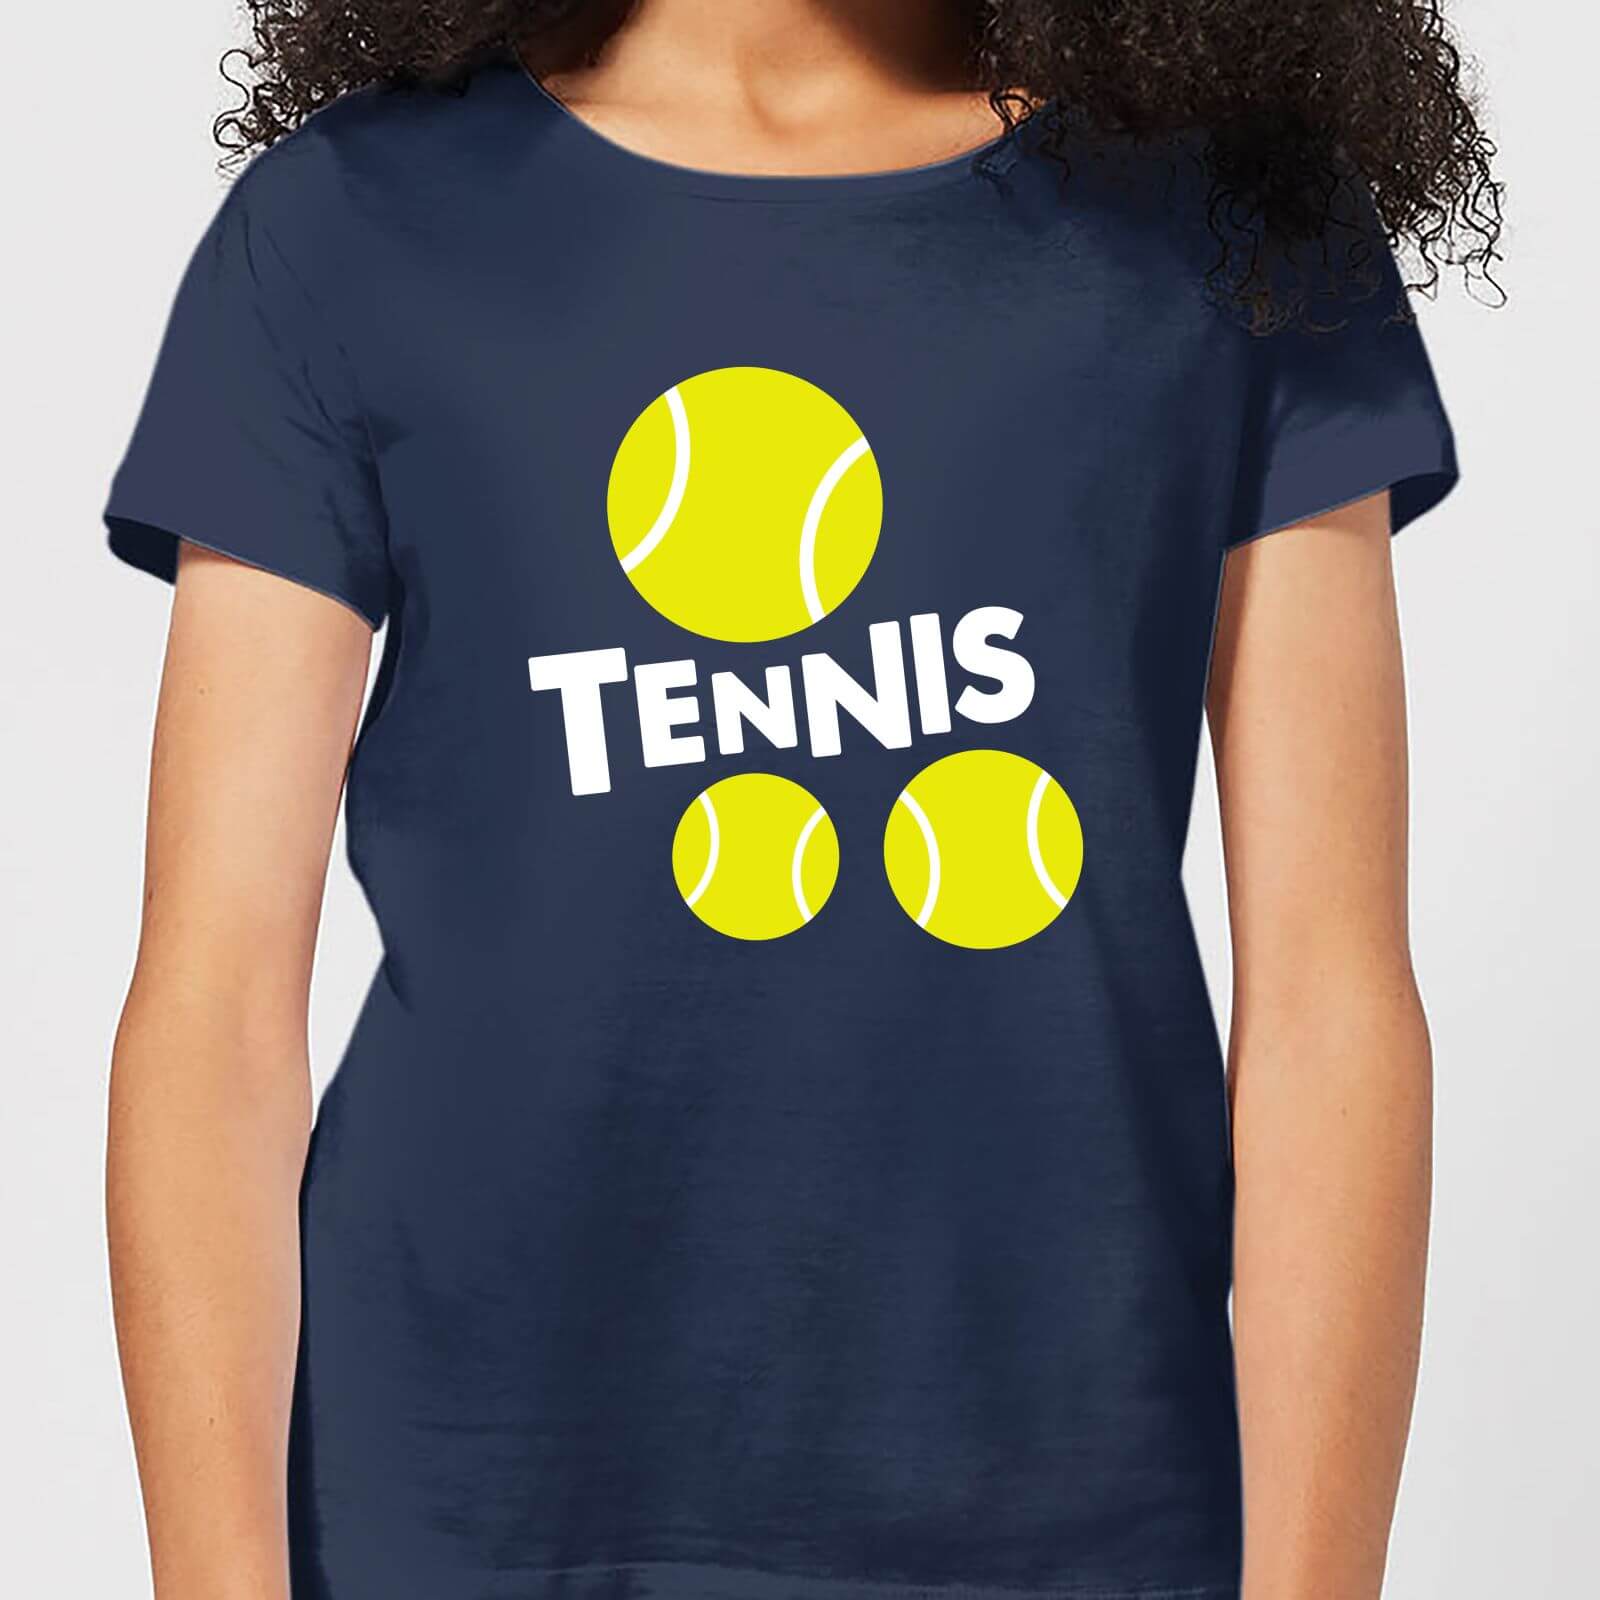 Tennis Balls Womens T-Shirt - Navy - L - Navy